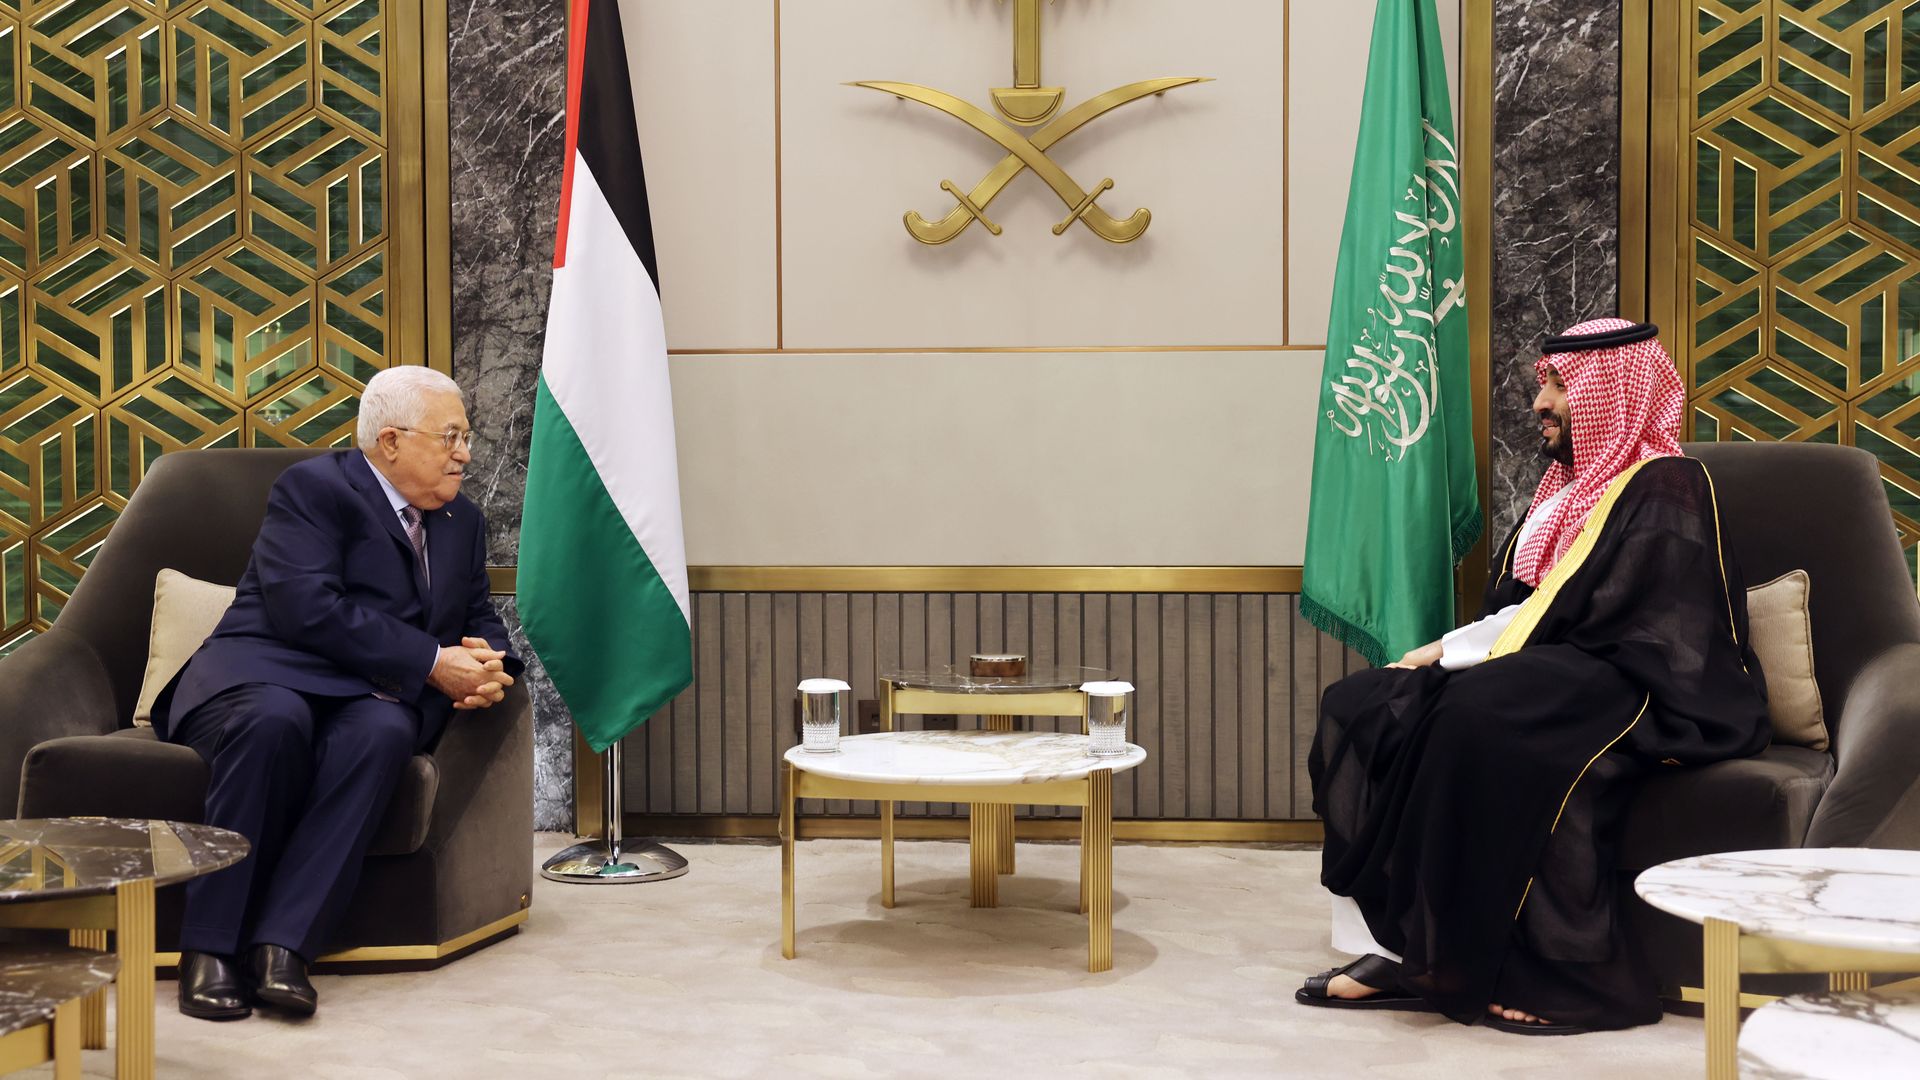 Palestinian President Mahmud Abbas meets with Saudi Arabian Crown Prince Mohammed bin Salman during an official visit in Jeddah on April 18. Photo: Handout/Palestinian Presidency/Anadolu Agency via Getty Images